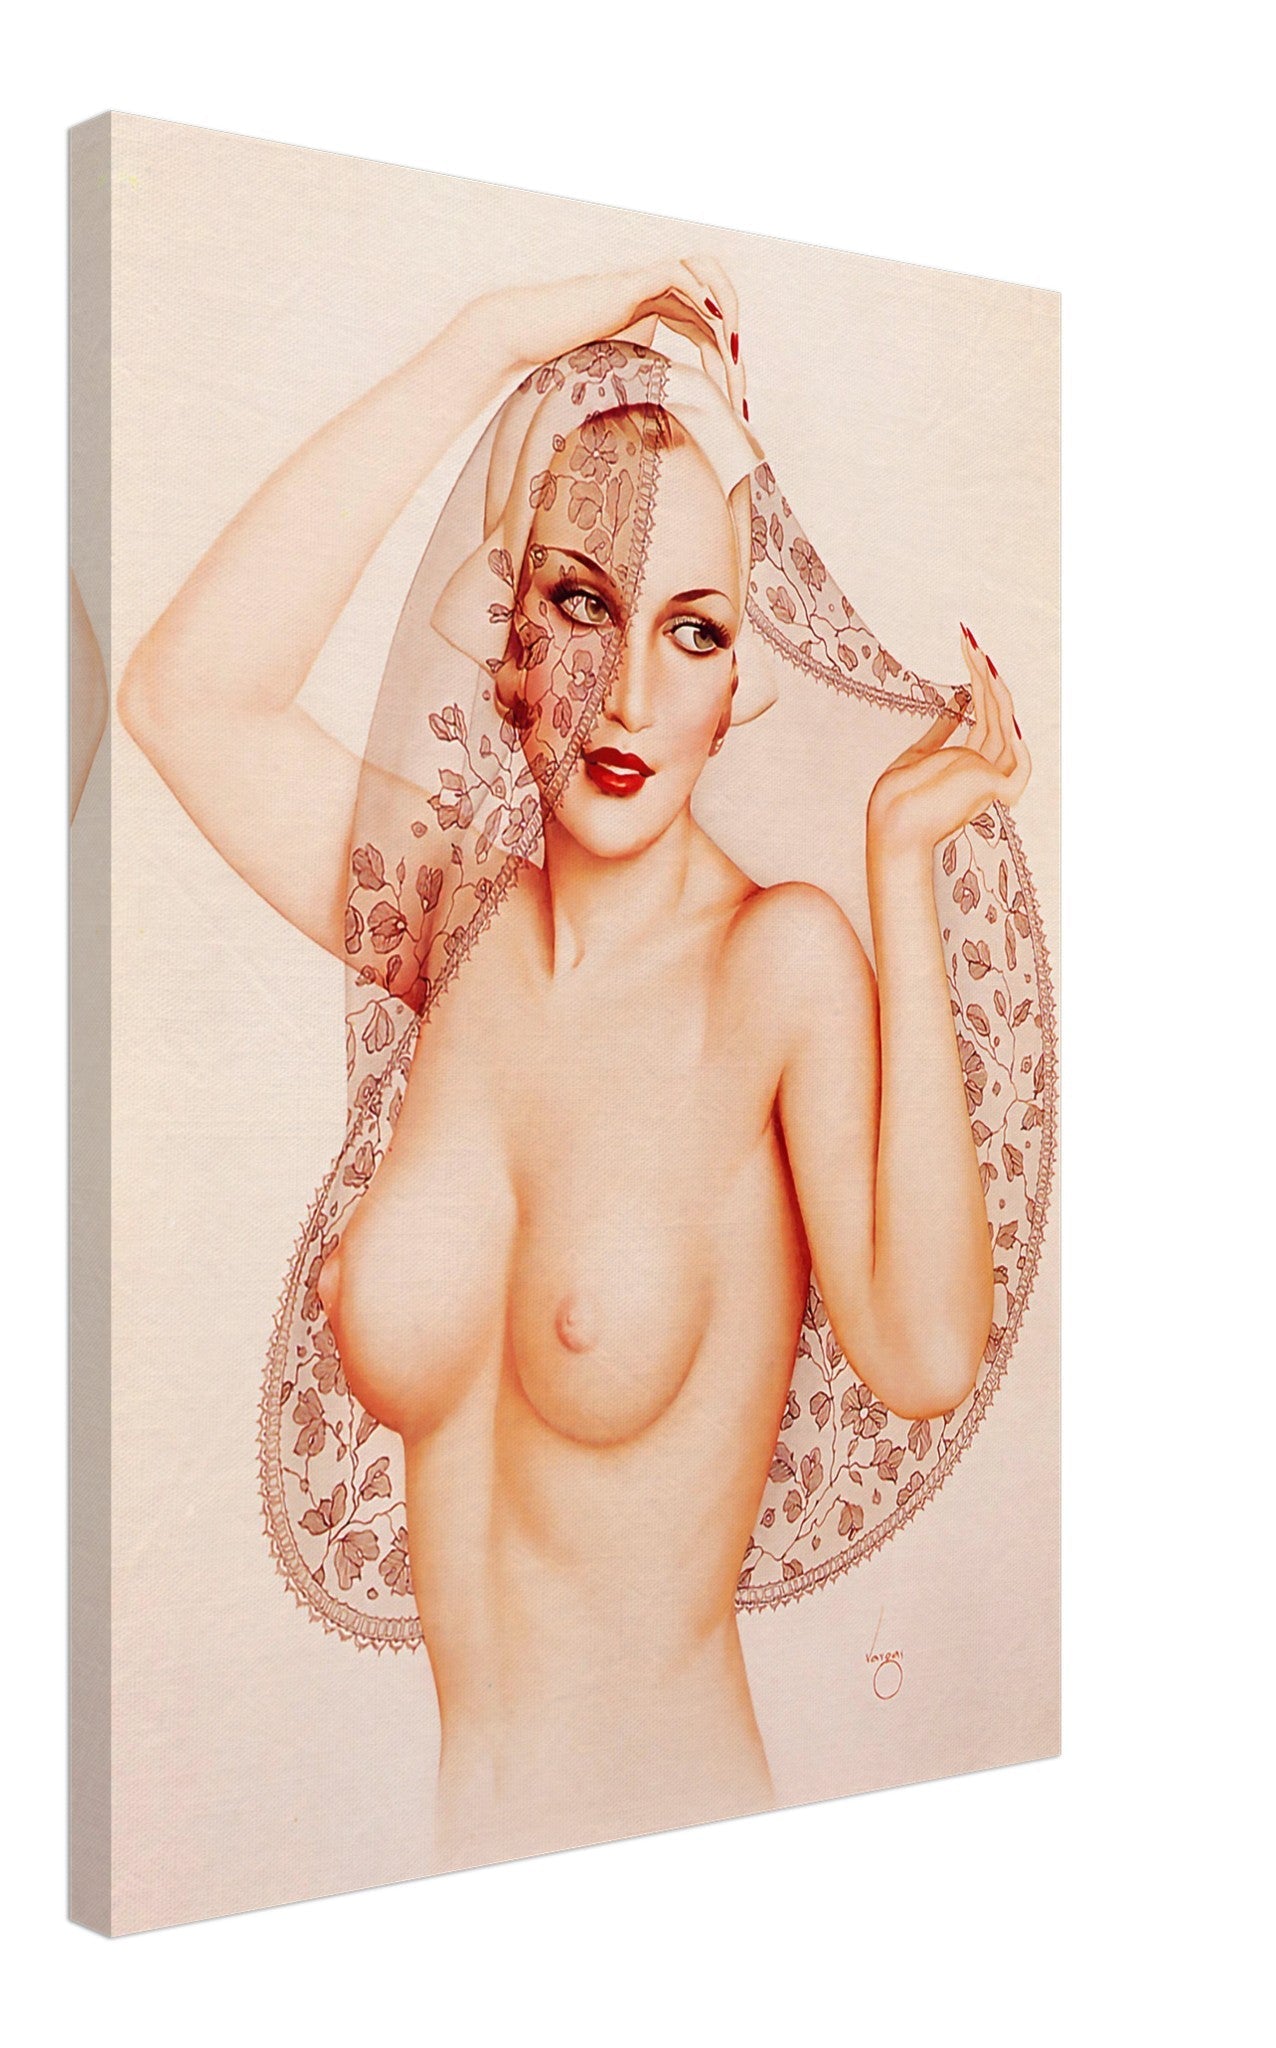 Vintage Pin Up Girl Canvas, Alberto Vargas, Topless Pin Up - Vintage Art - Retro Pin Up Girl Canvas Print - Late 1940's - 1950's - WallArtPrints4U